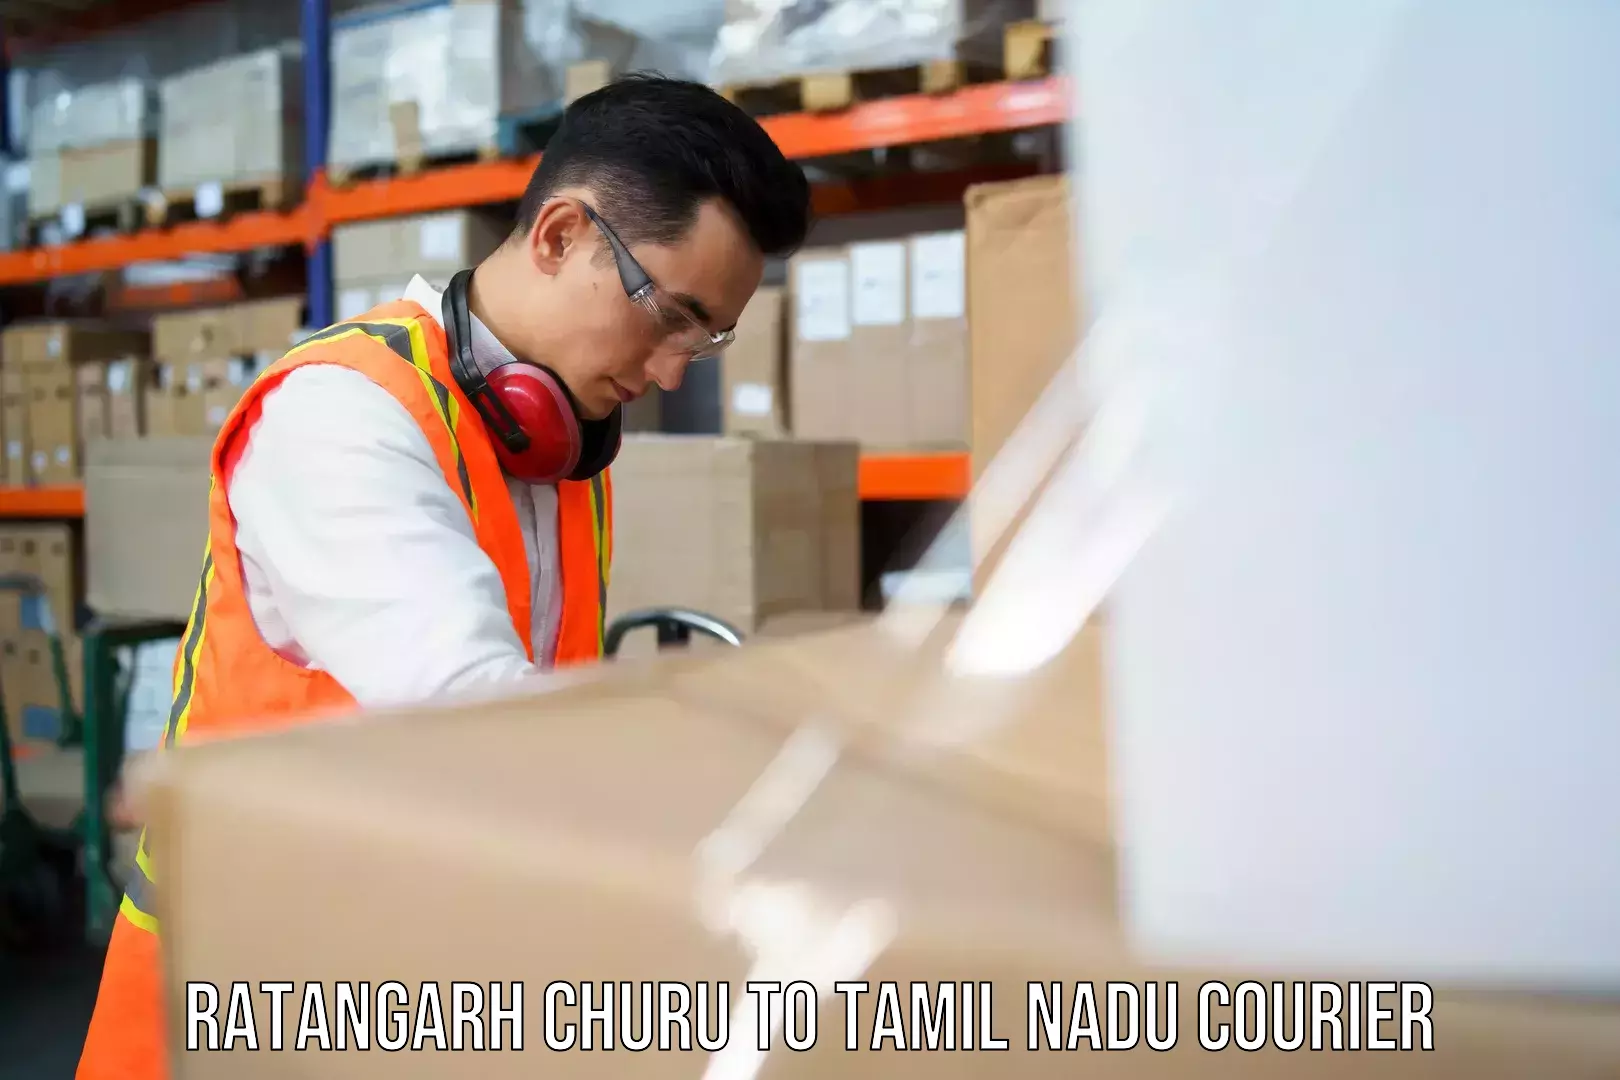 Reliable delivery network Ratangarh Churu to Tenkasi